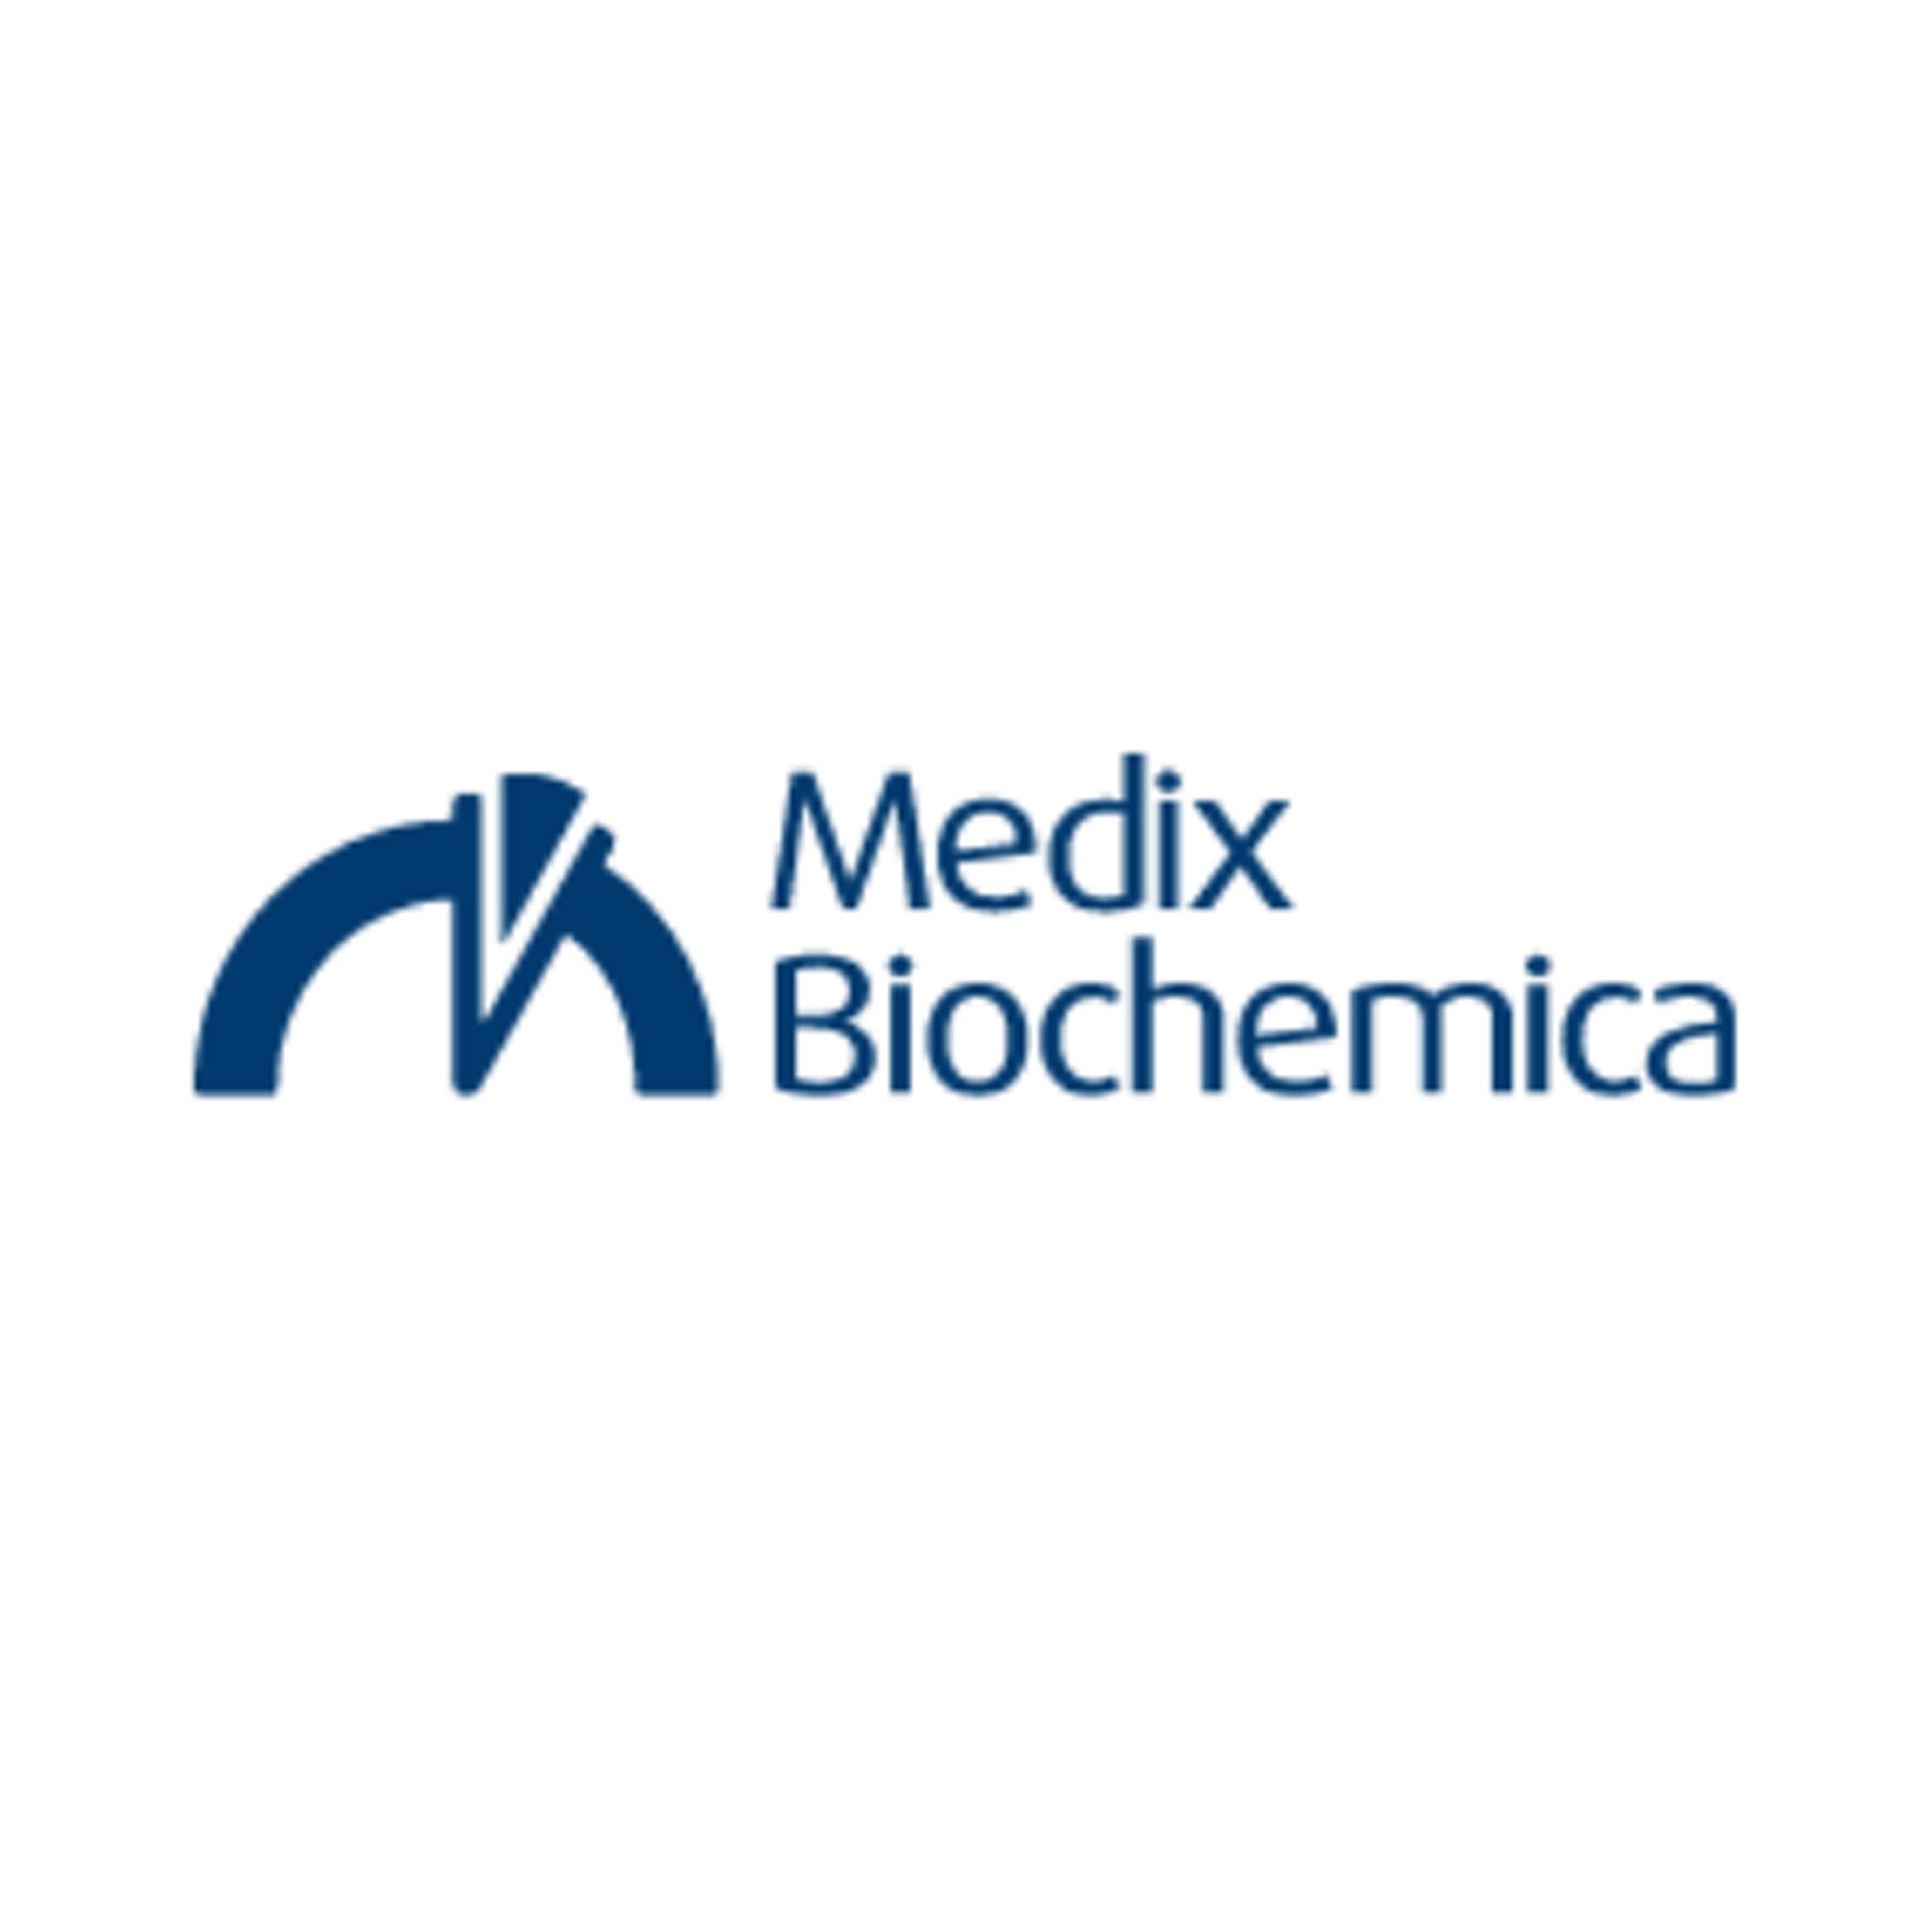 Medix Biochemica单克隆抗体、抗原等原料